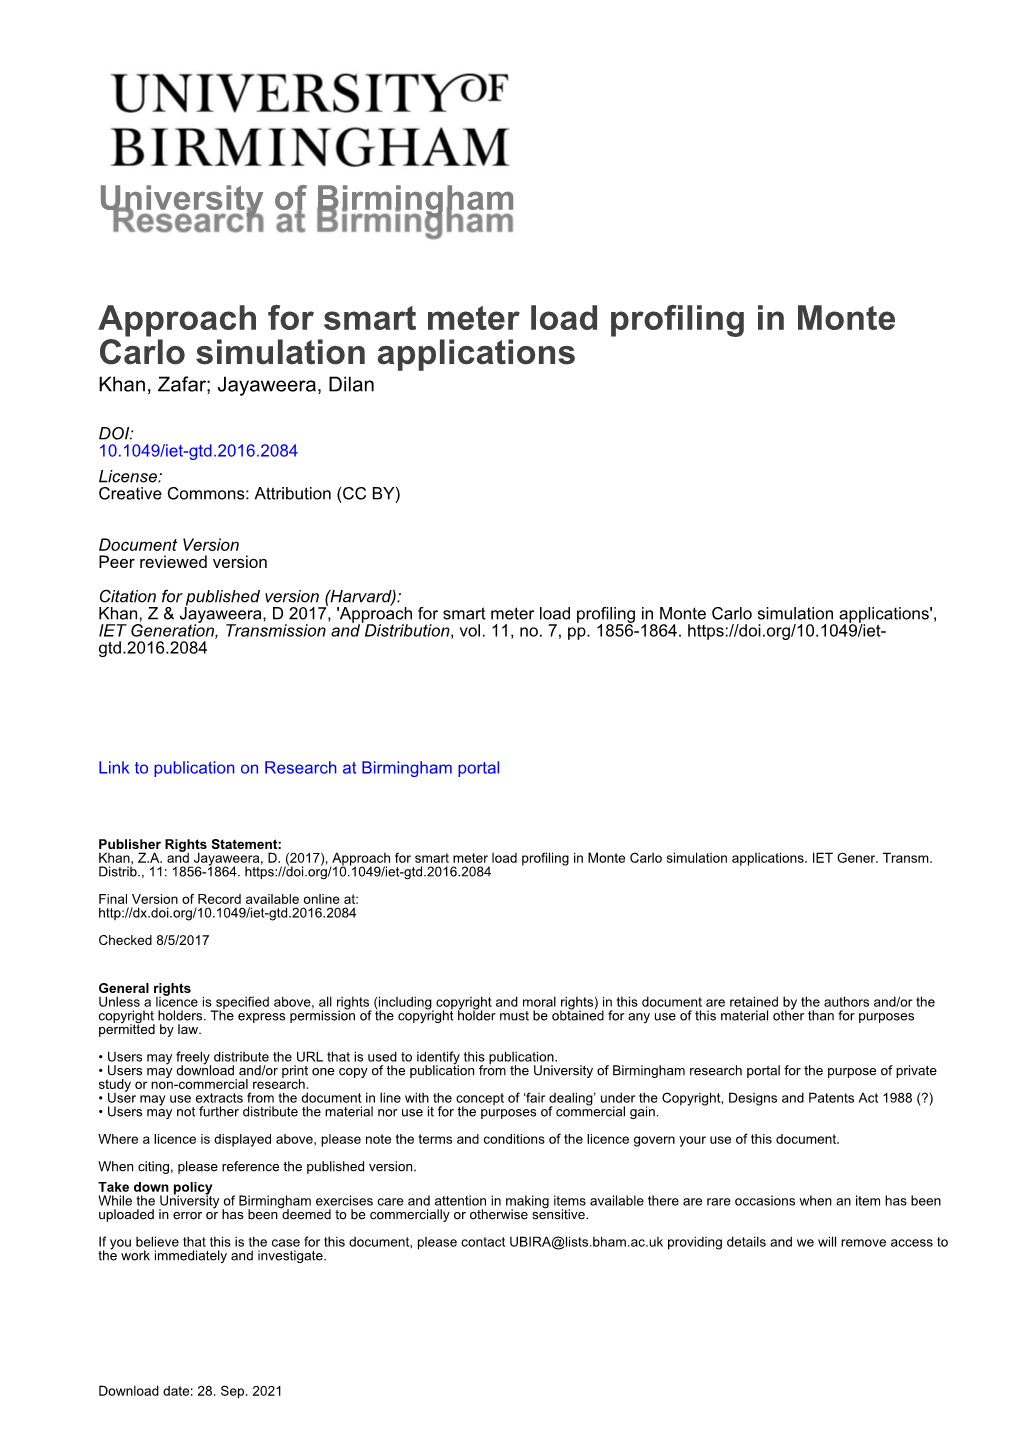 University of Birmingham Approach for Smart Meter Load Profiling in Monte